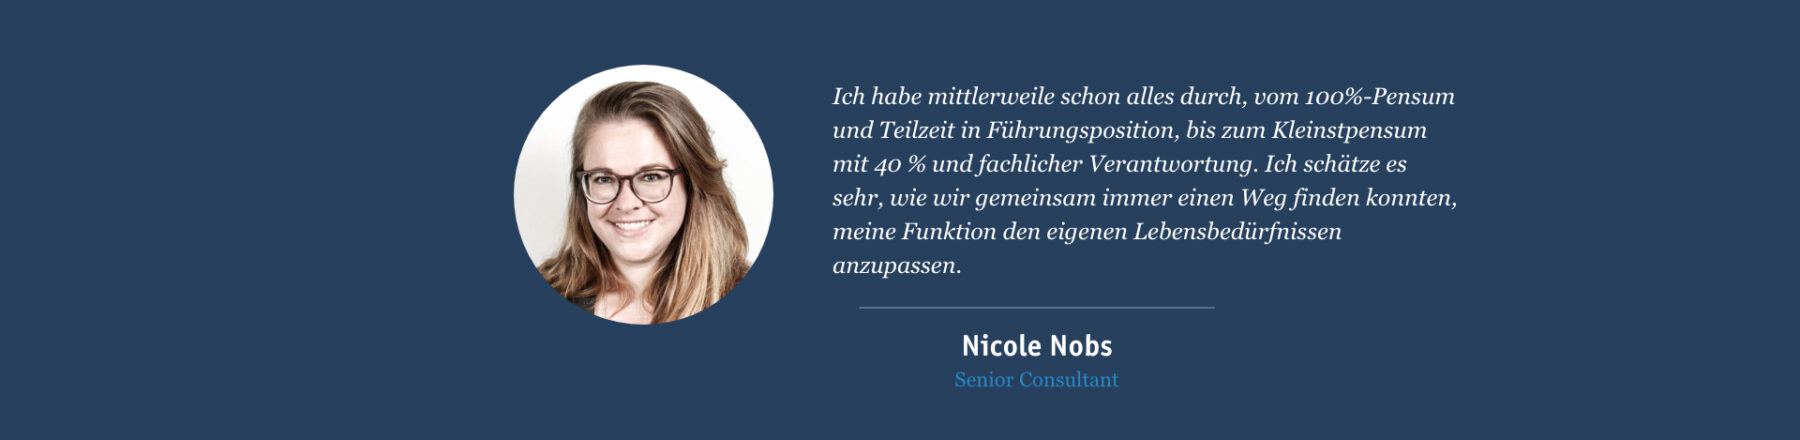 Statement Nicole Nobs